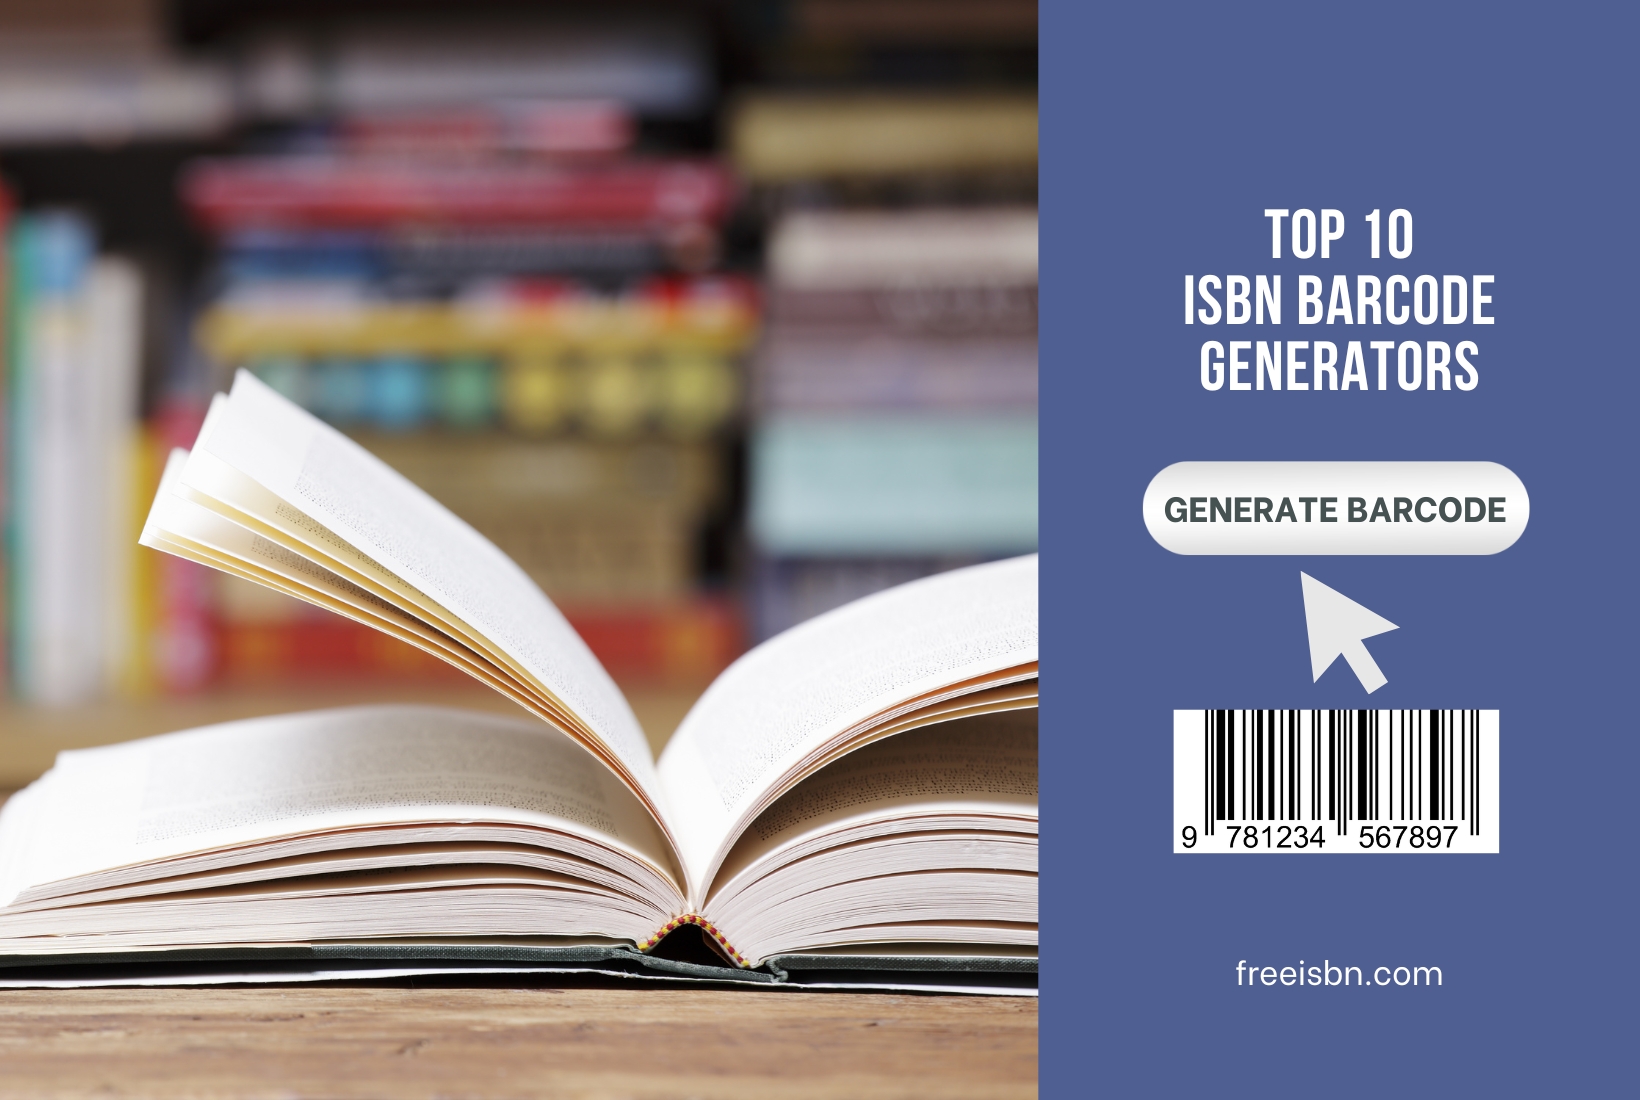 Top 10 ISBN Barcode Generators – Generate Barcode for Free